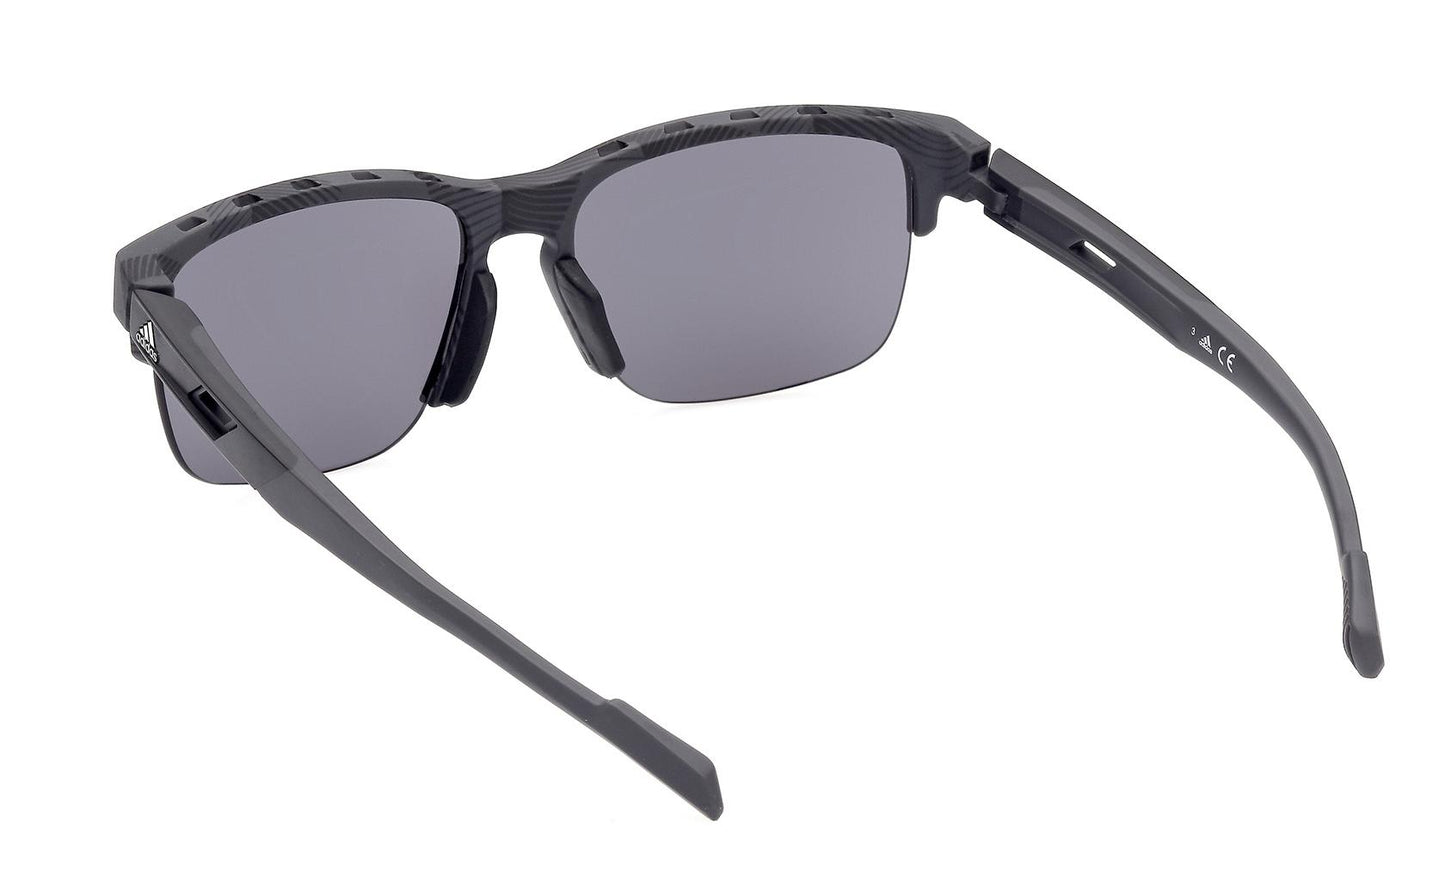 Adidas Sport Sunglasses 05A BLACK/OTHER